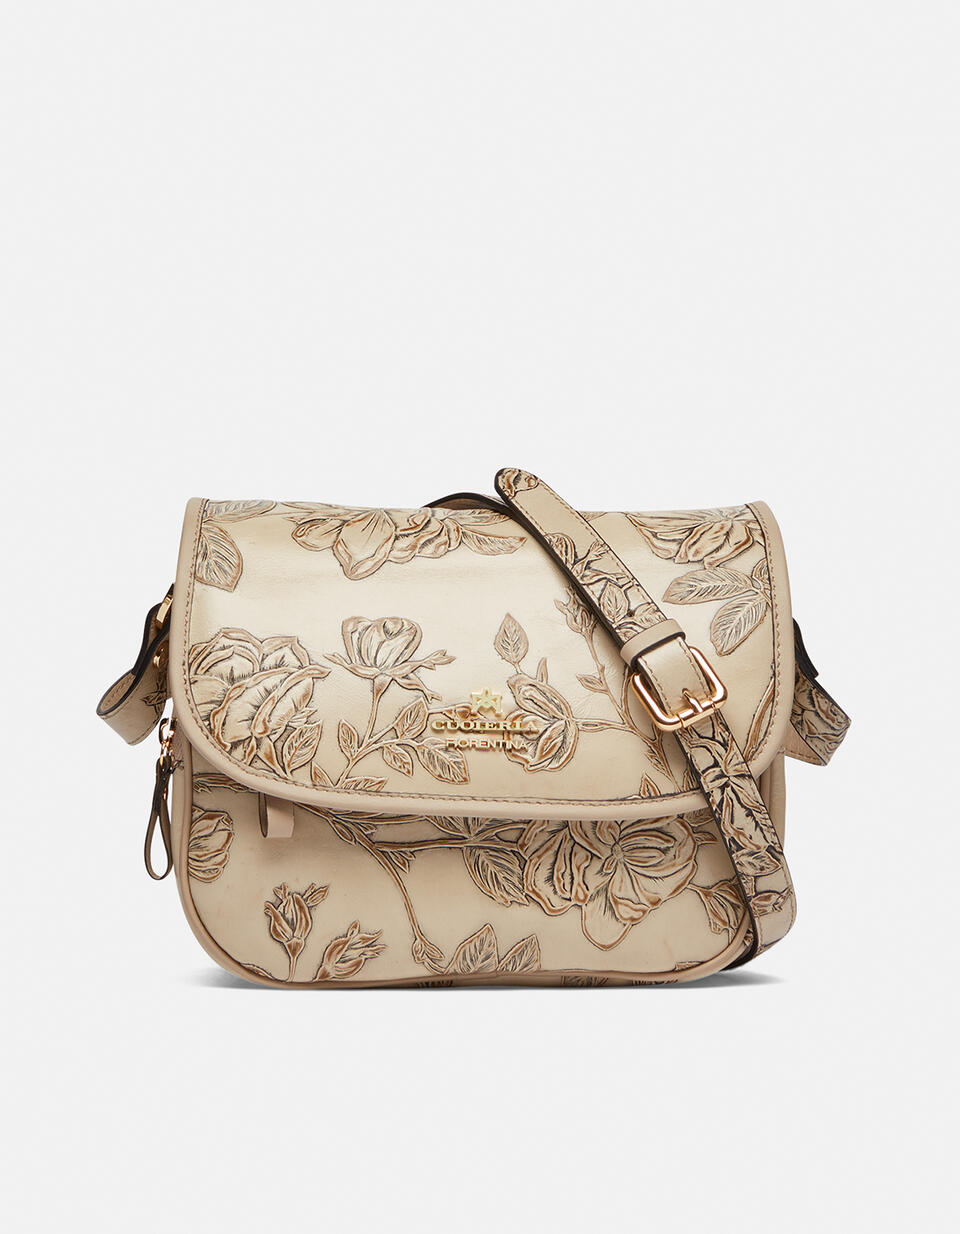 Messenger bag in rose embossed printed calfleather - Messenger Bags - WOMEN'S BAGS | bags Mimì TAUPE - Messenger Bags - WOMEN'S BAGS | bagsCuoieria Fiorentina